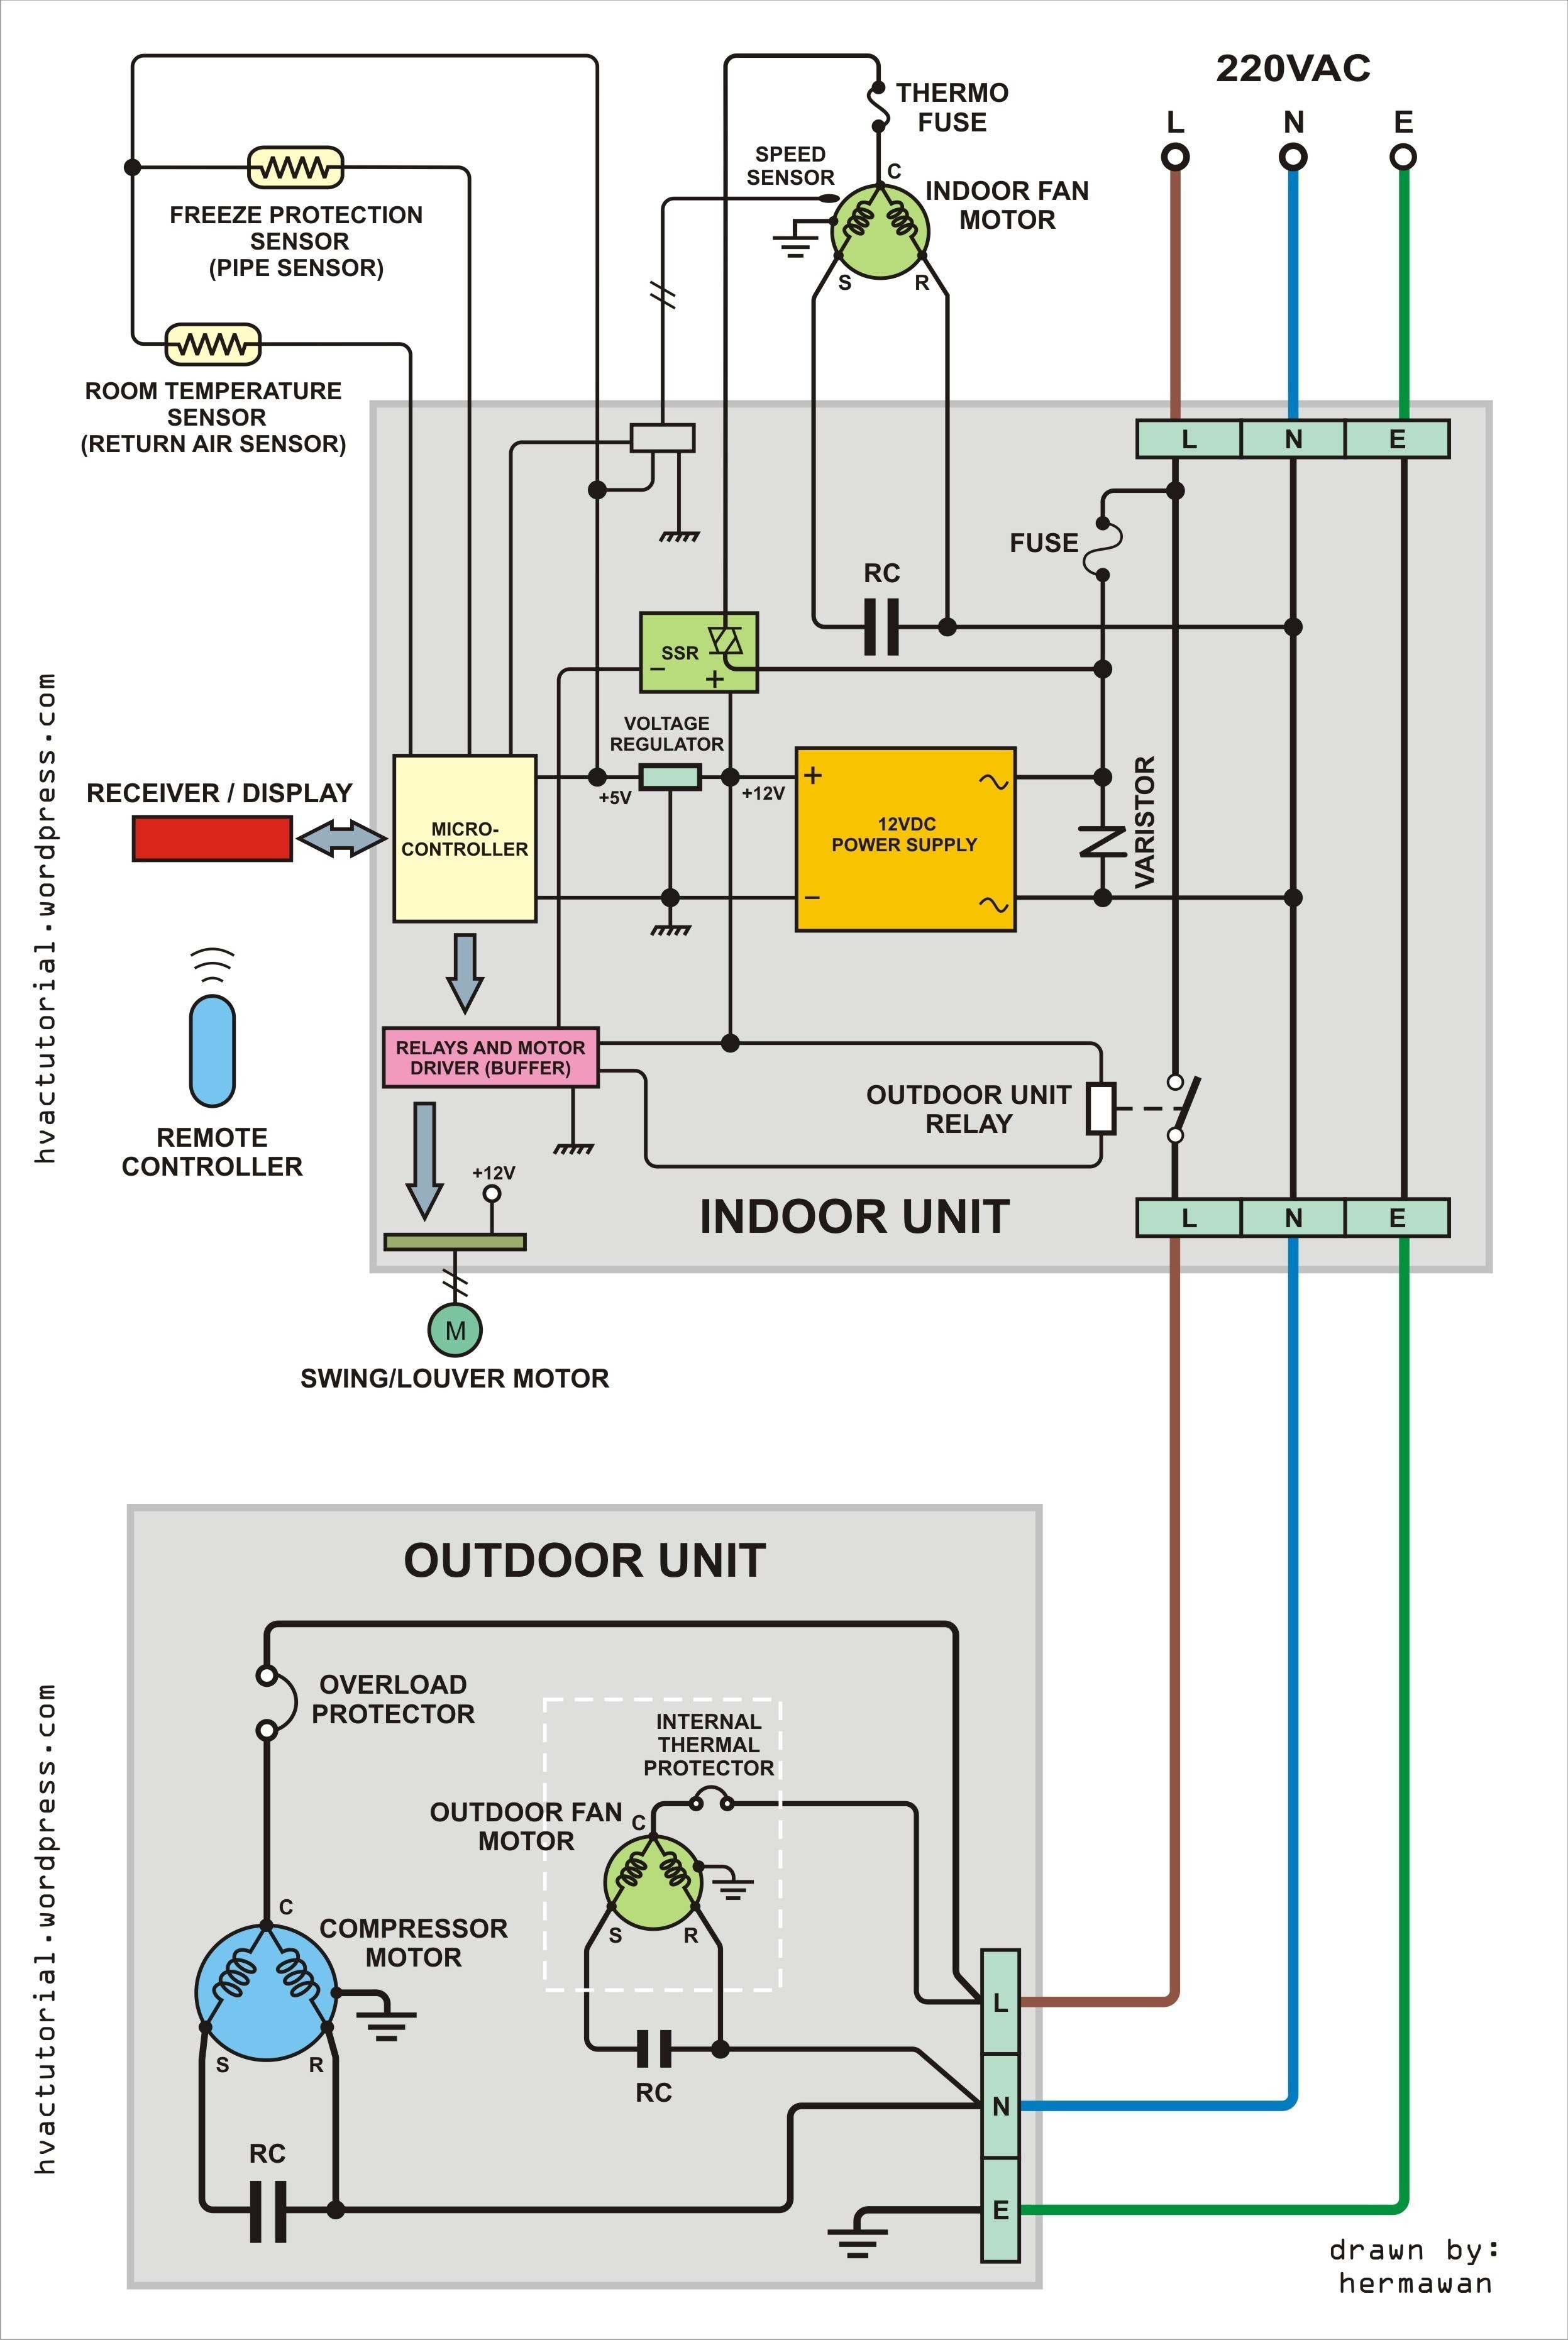 Ac Wiring Diagram thermostat Ac Mini Split System Wiring Diagram Of Ac Wiring Diagram thermostat